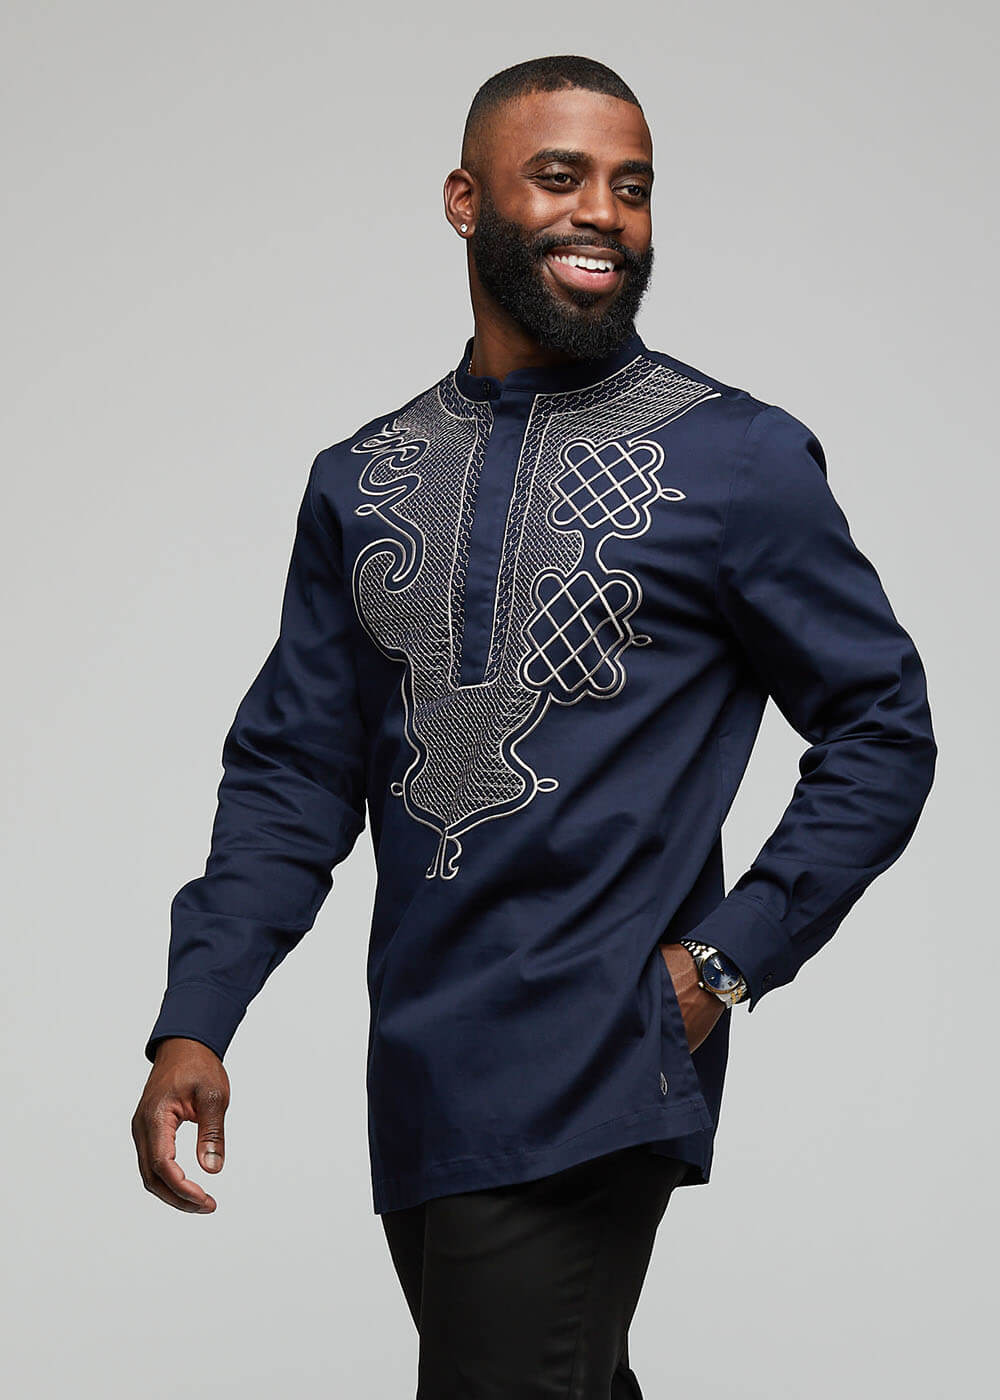 Men's Traditional Wear, African Men's Wear, African Men's